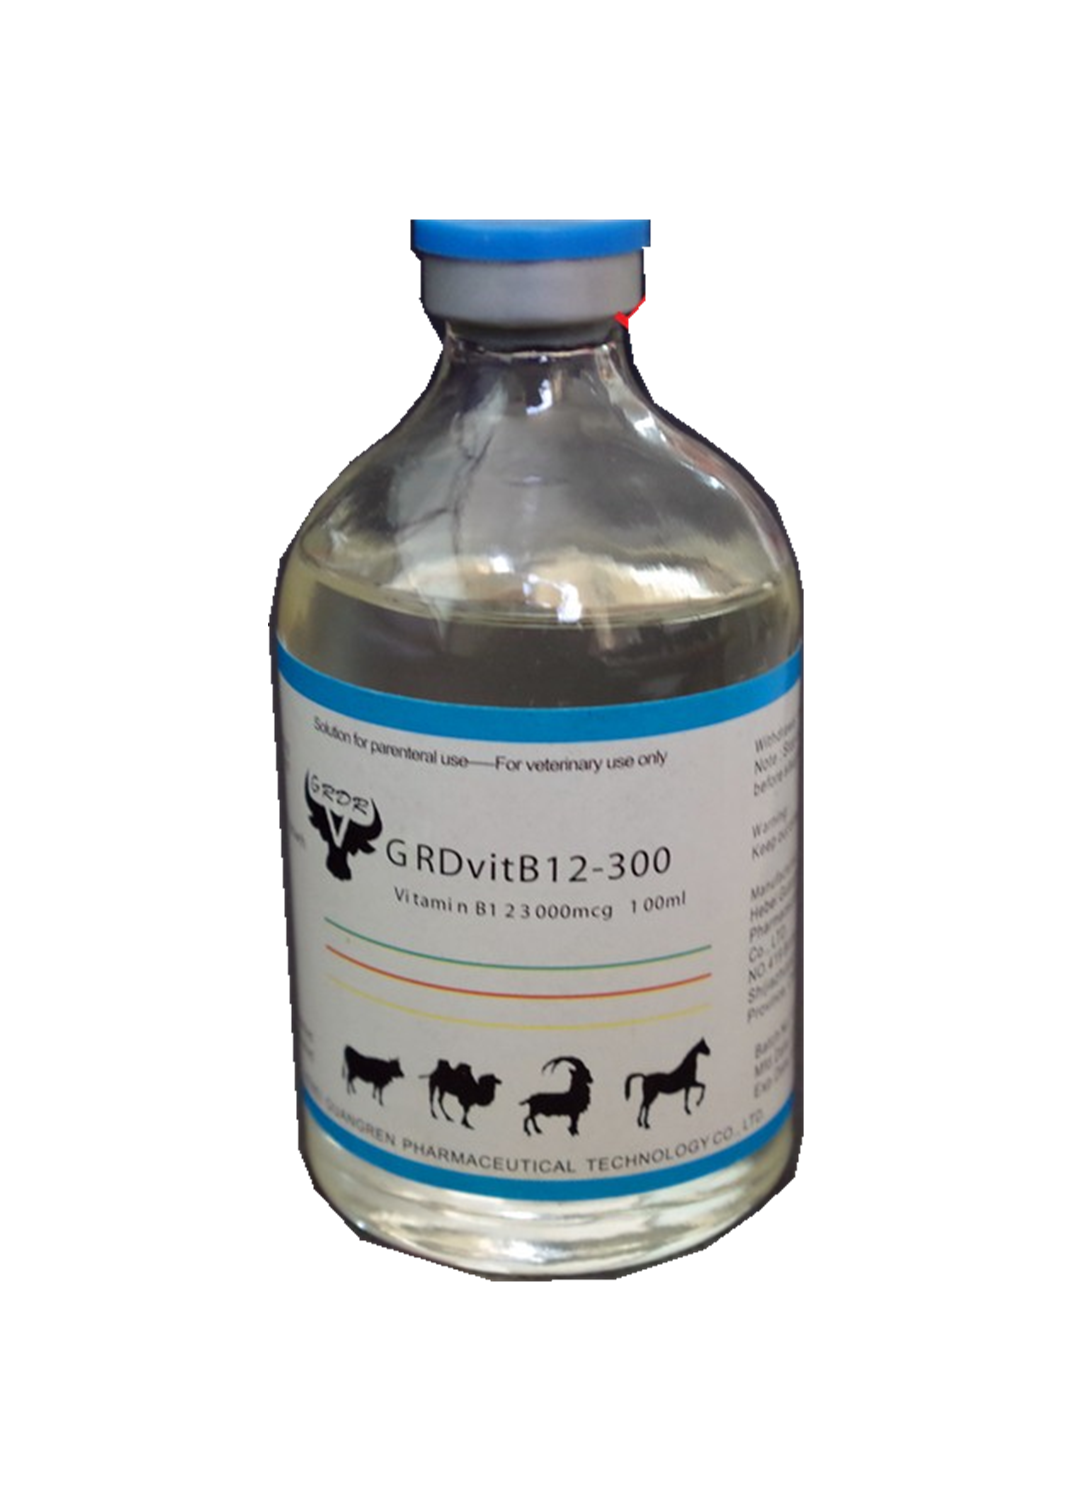 Injectable Vitamin B12 Iron Dextran Solution